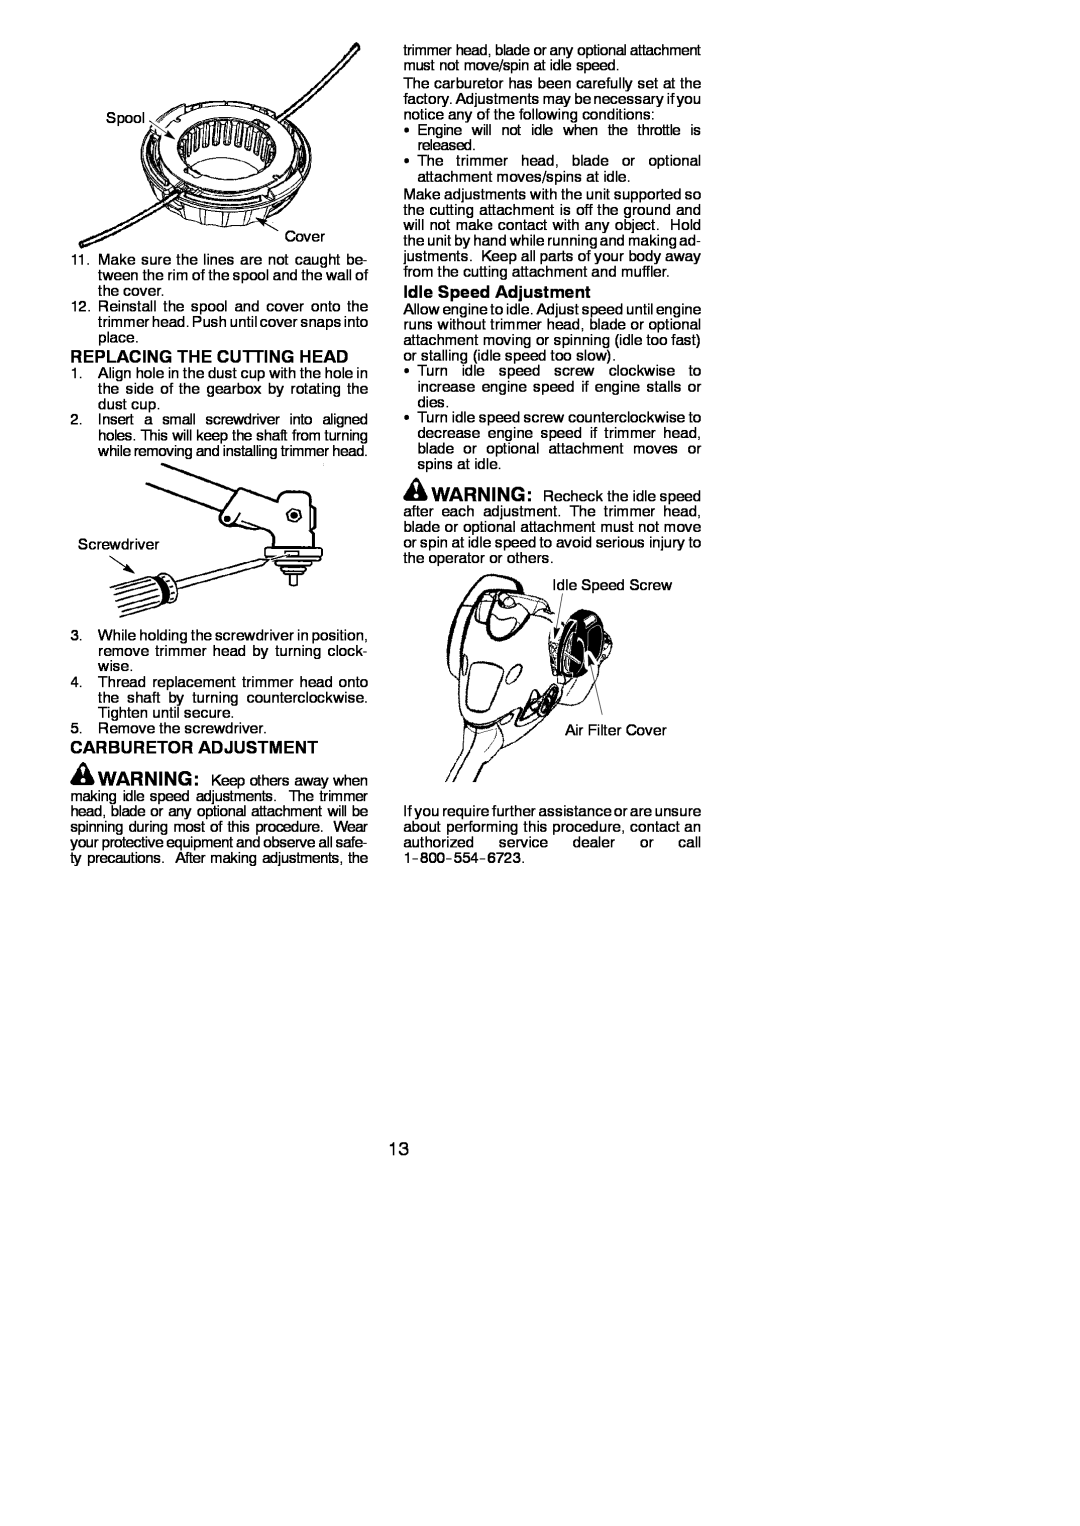 Poulan PP125 instruction manual Replacing The Cutting Head, Carburetor Adjustment, Idle Speed Adjustment 